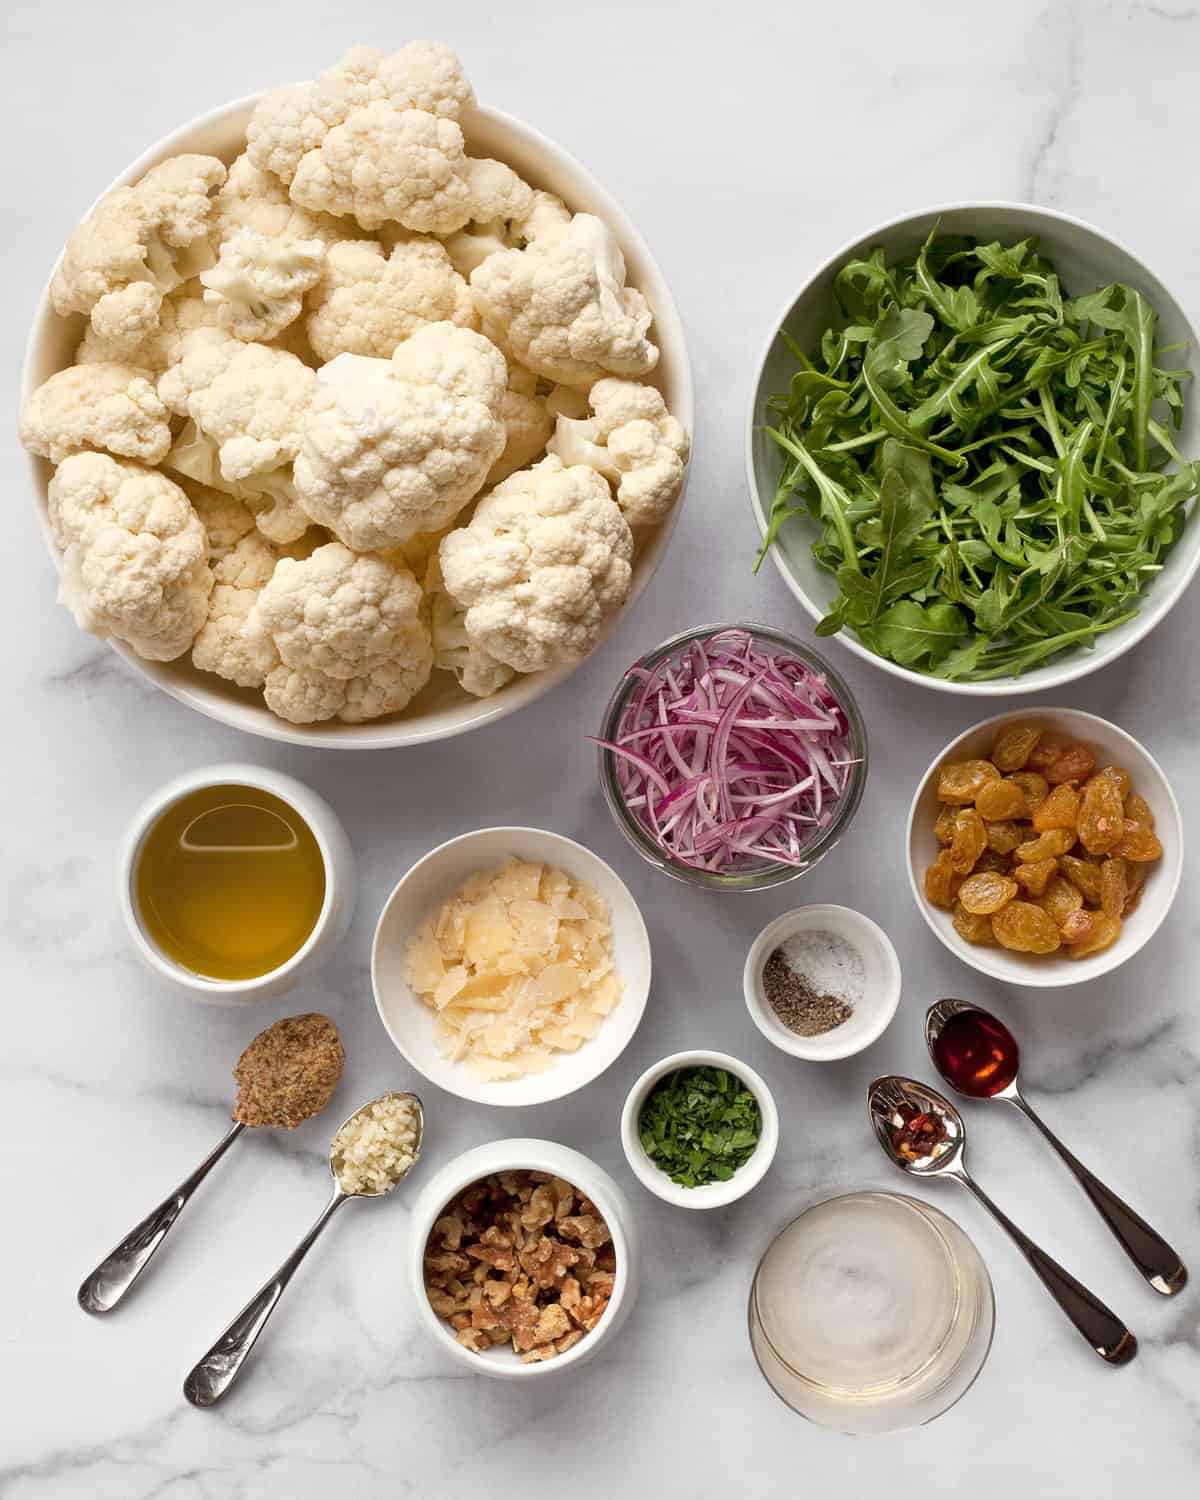 Ingredients including cauliflower, arugula, red onions, Parmesan, raisins, olive oil and vinegar.